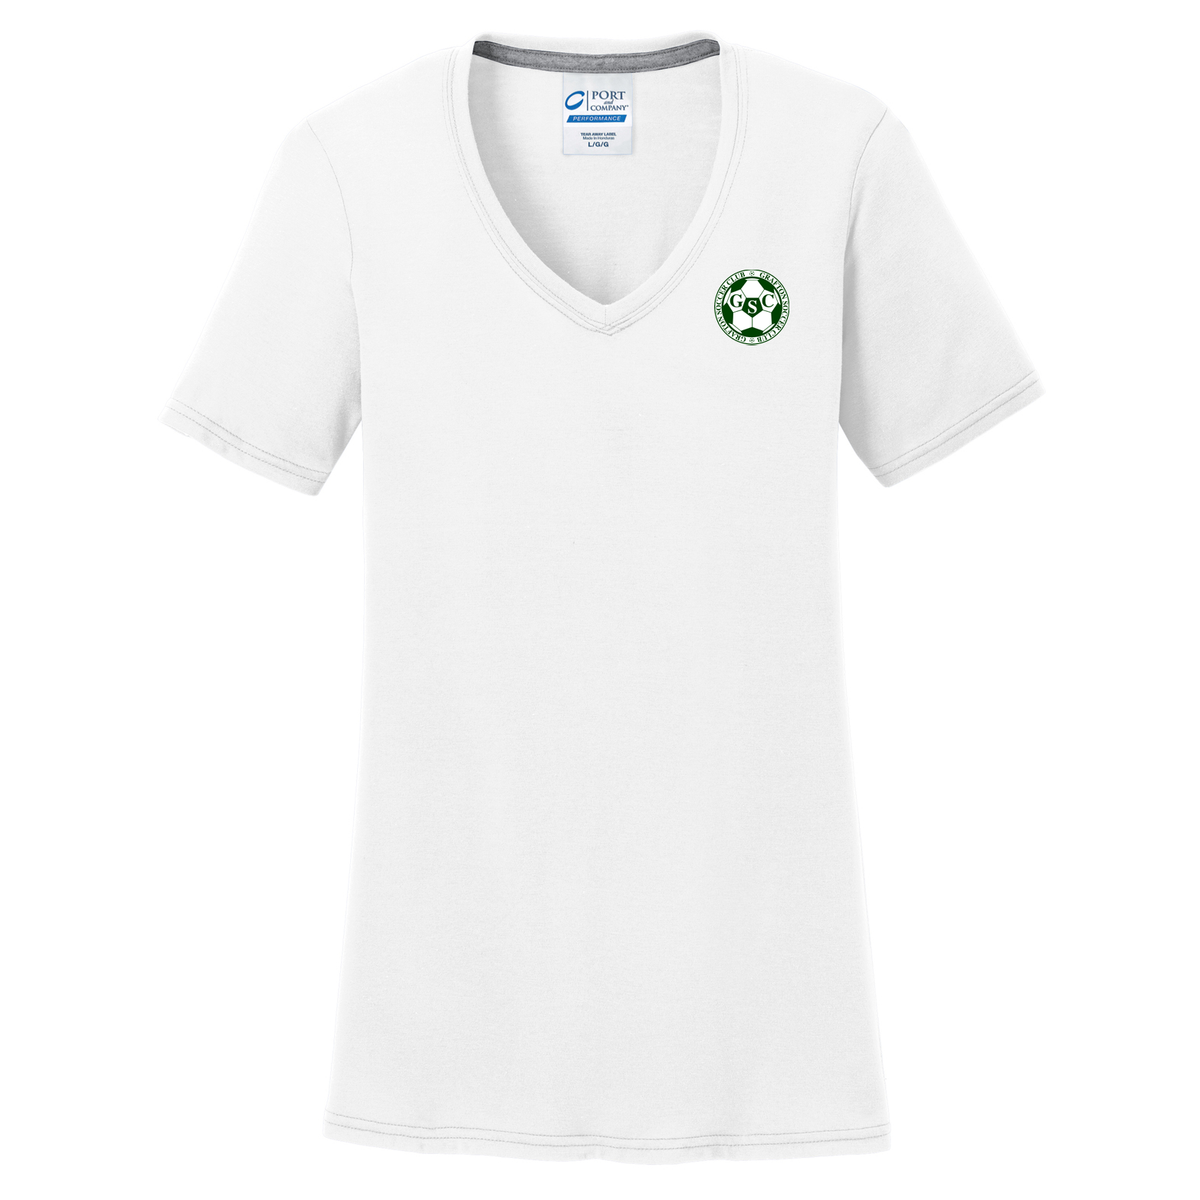 Grafton Youth Soccer Club Women's T-Shirt